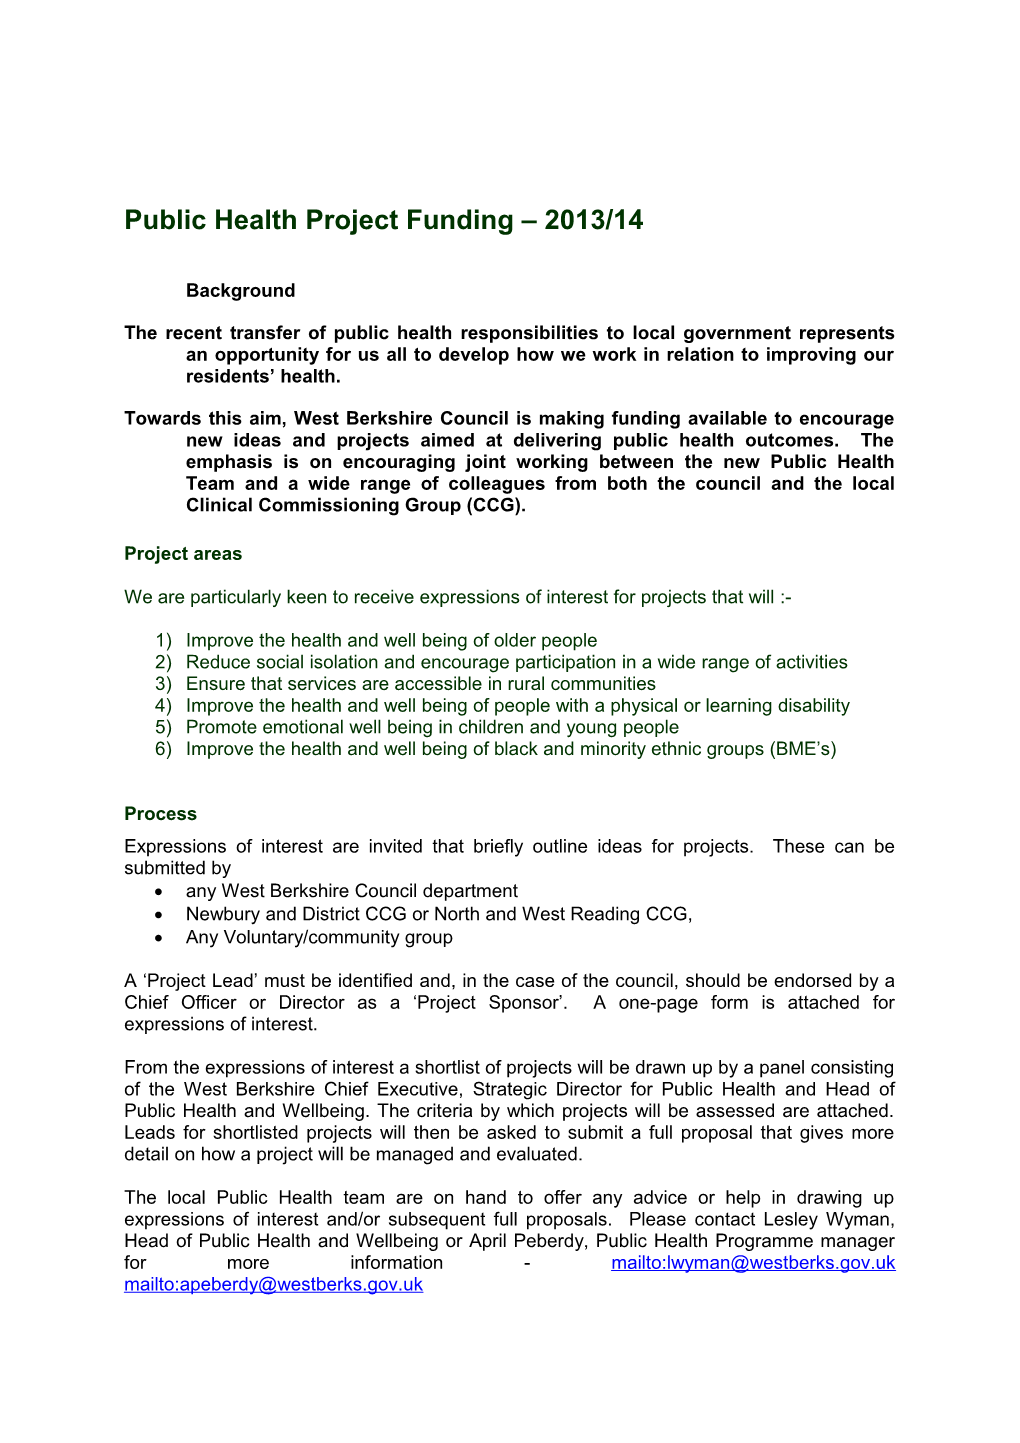 Public Health Project Grants 2013/14